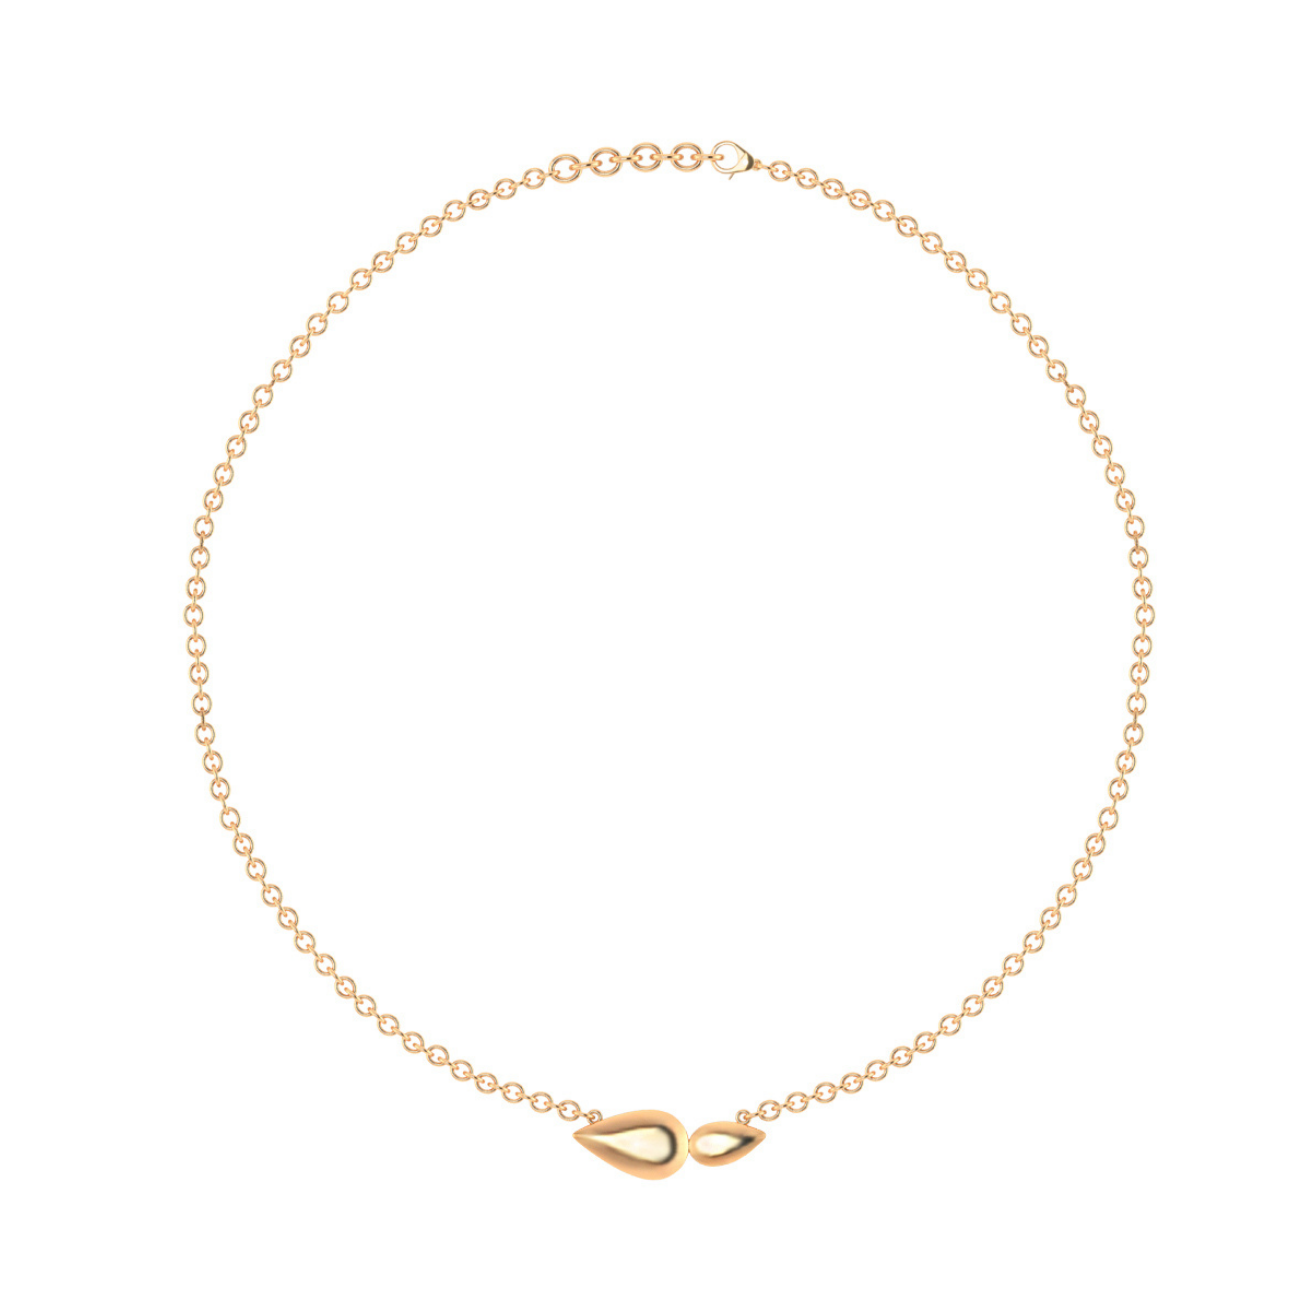 Lotus necklace 18k gold